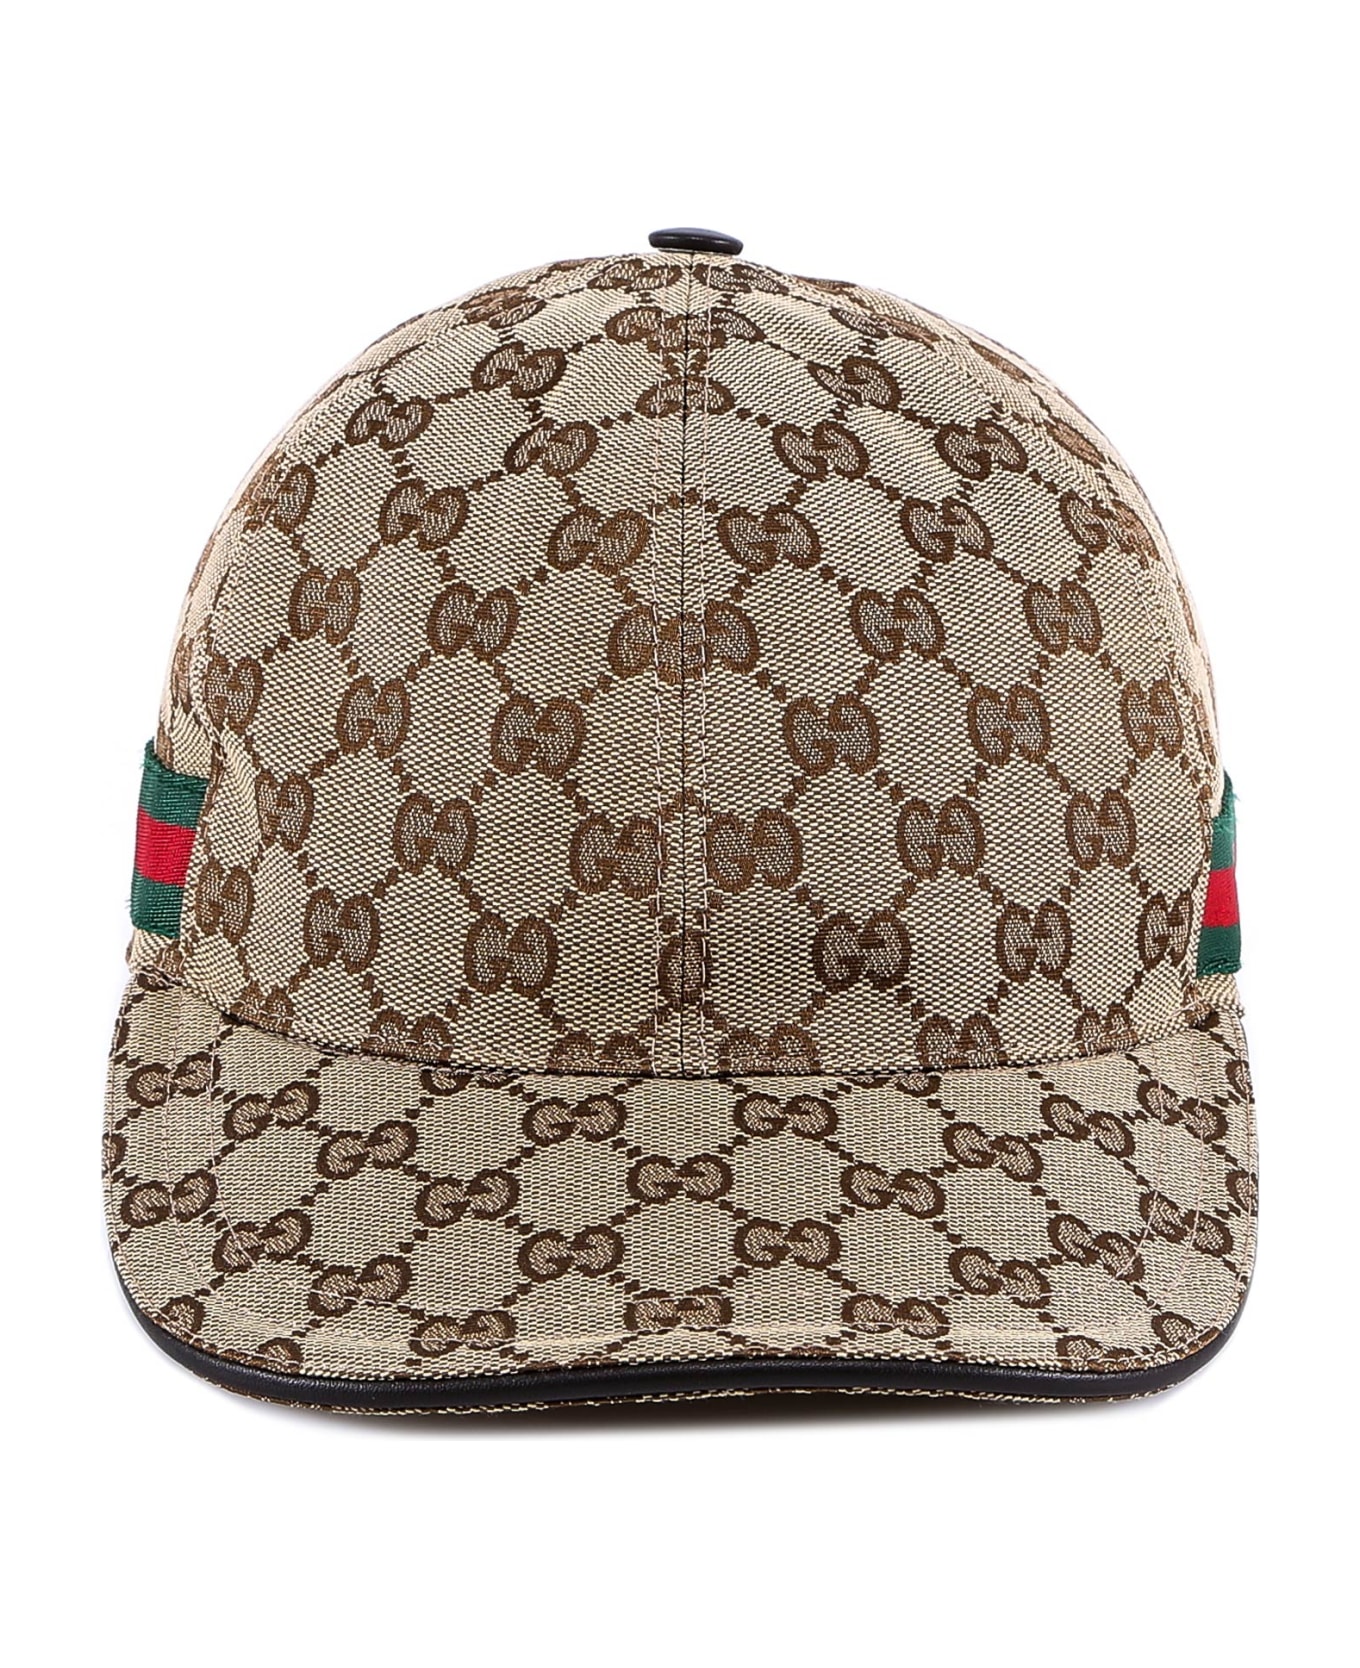 Gucci Hat - Beige